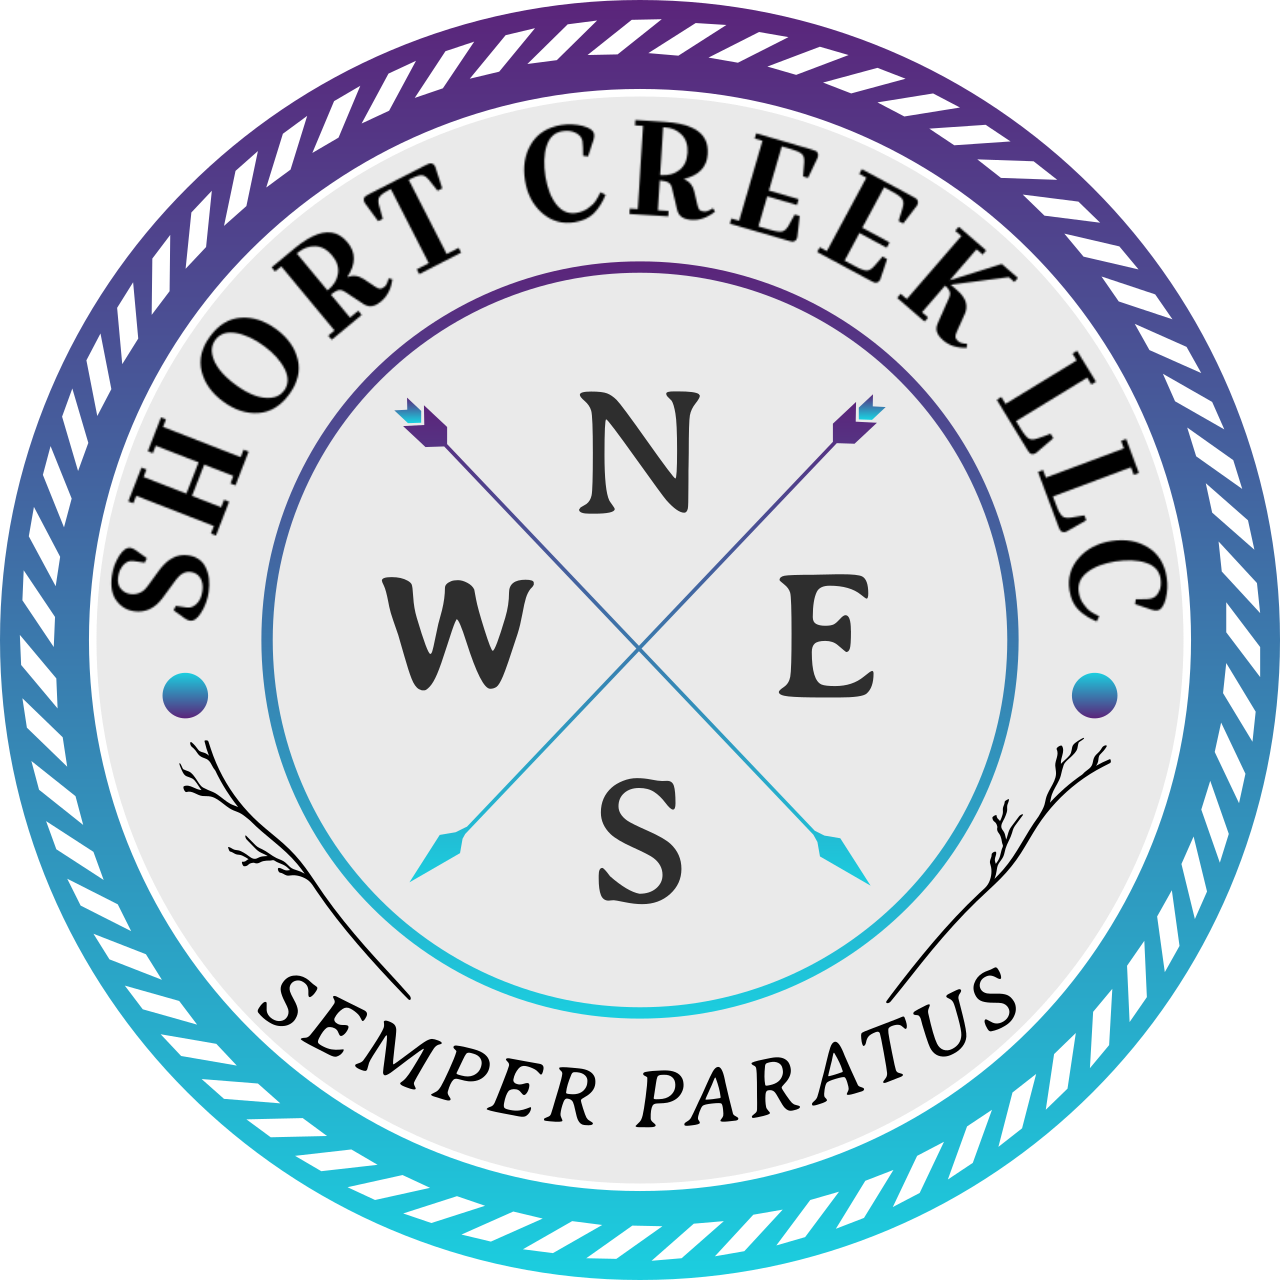 SHORT CREEK LLC's logo